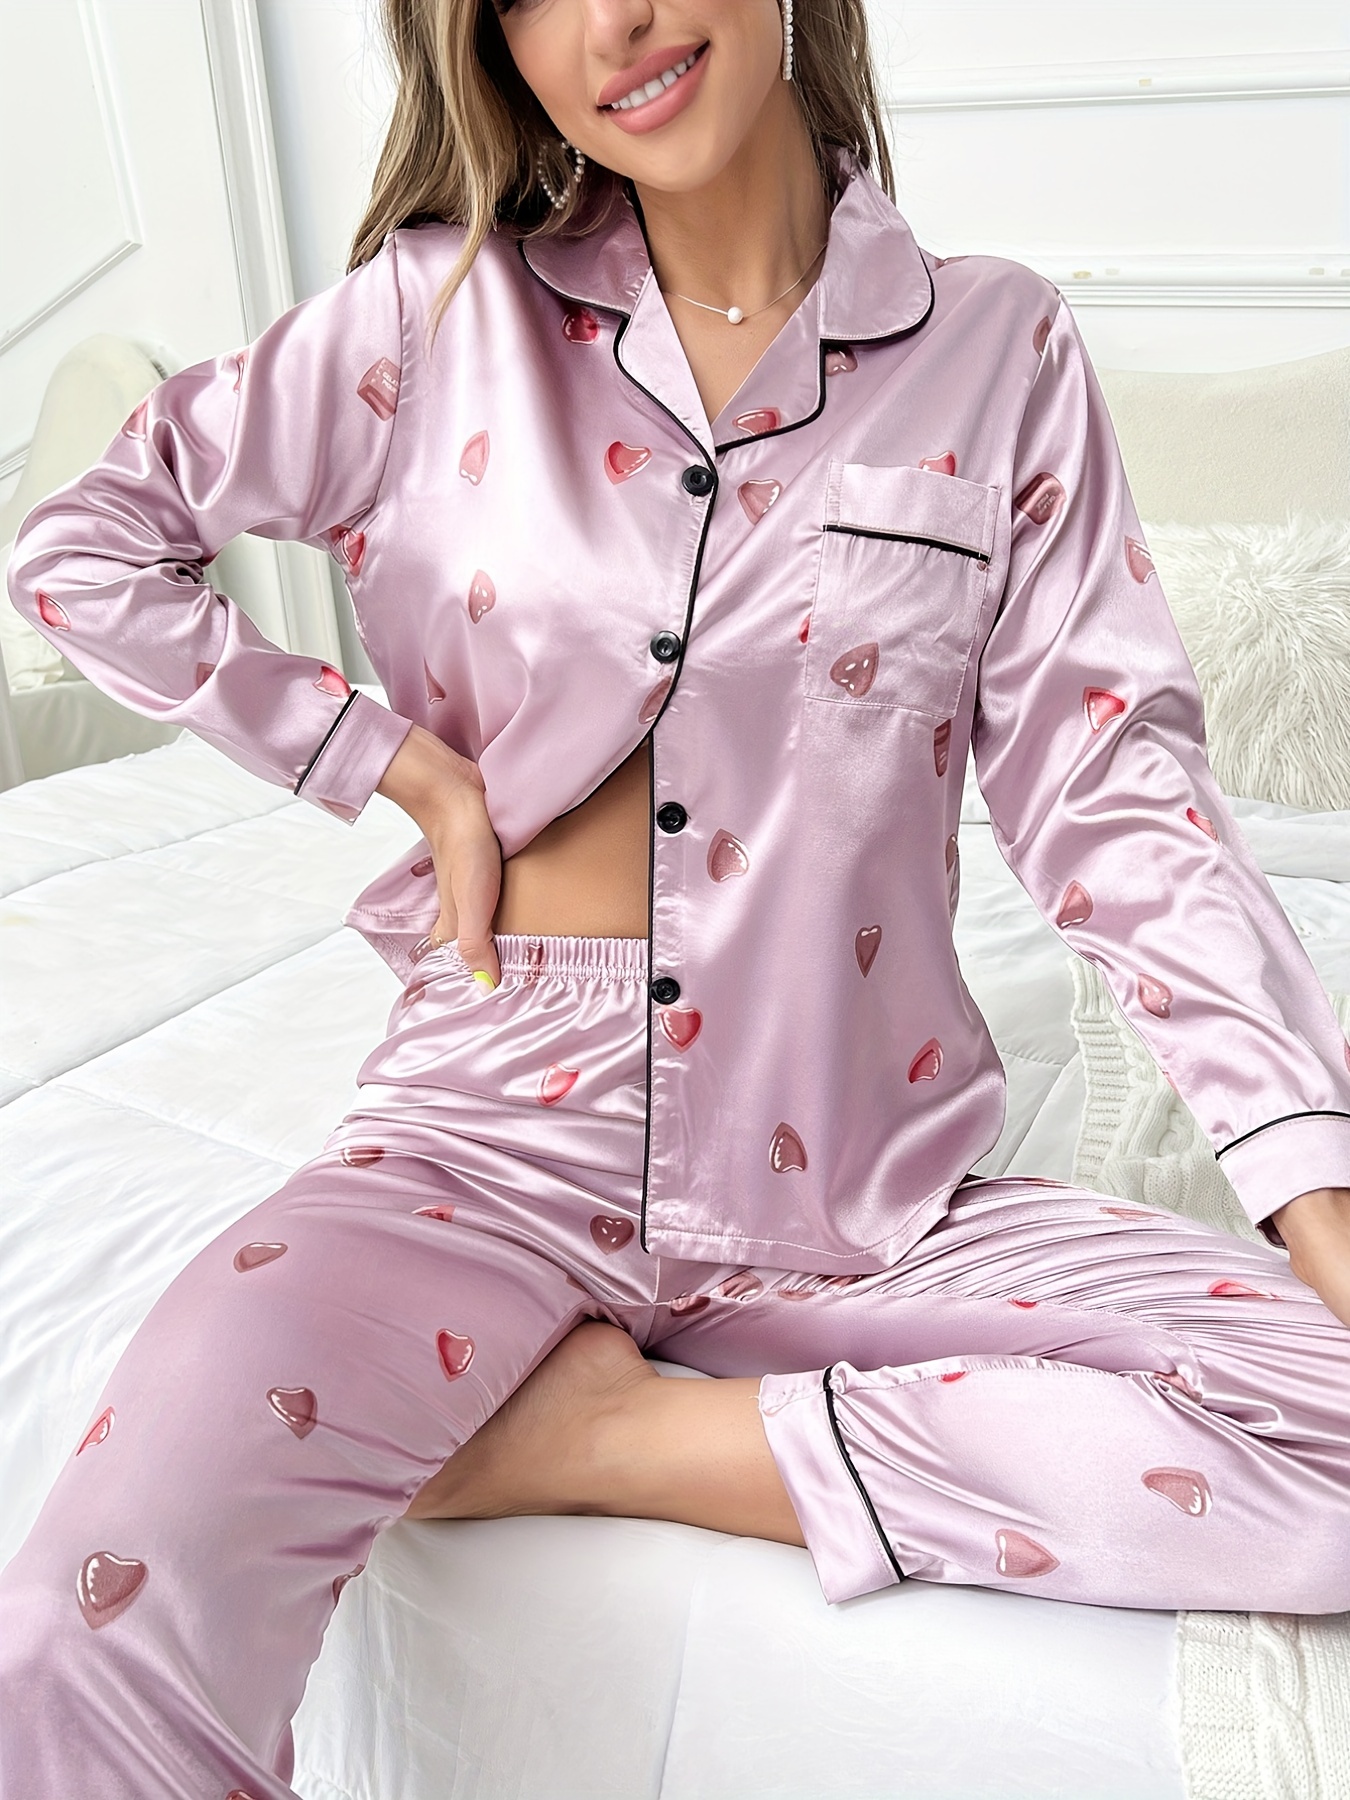 stars above, Intimates & Sleepwear, Stars Above Pink Satin Pajamas